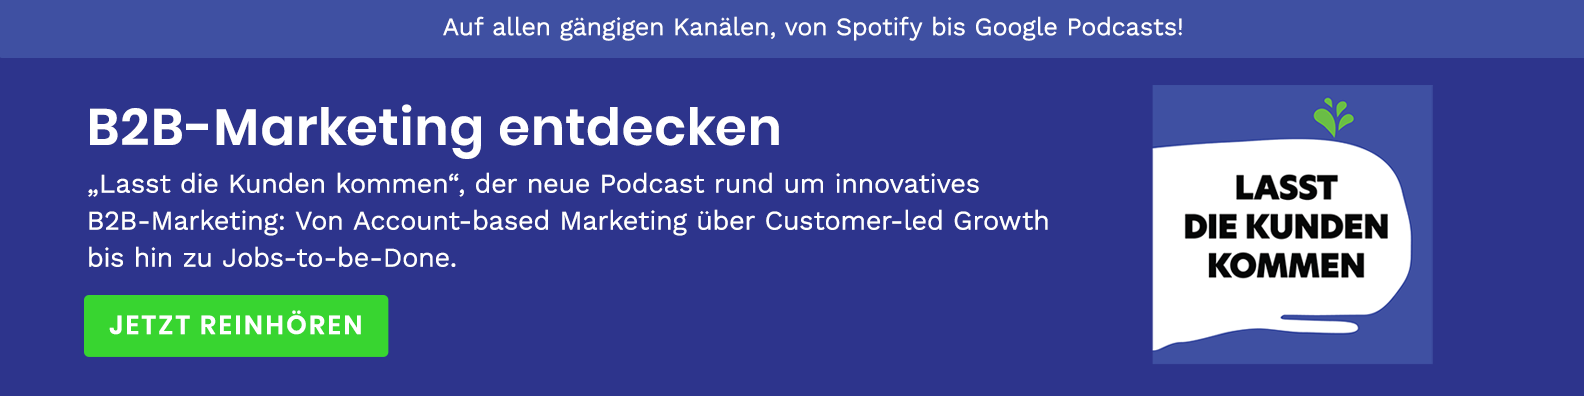 B2B Marketing Podcast "Lasst die Kunden kommen"